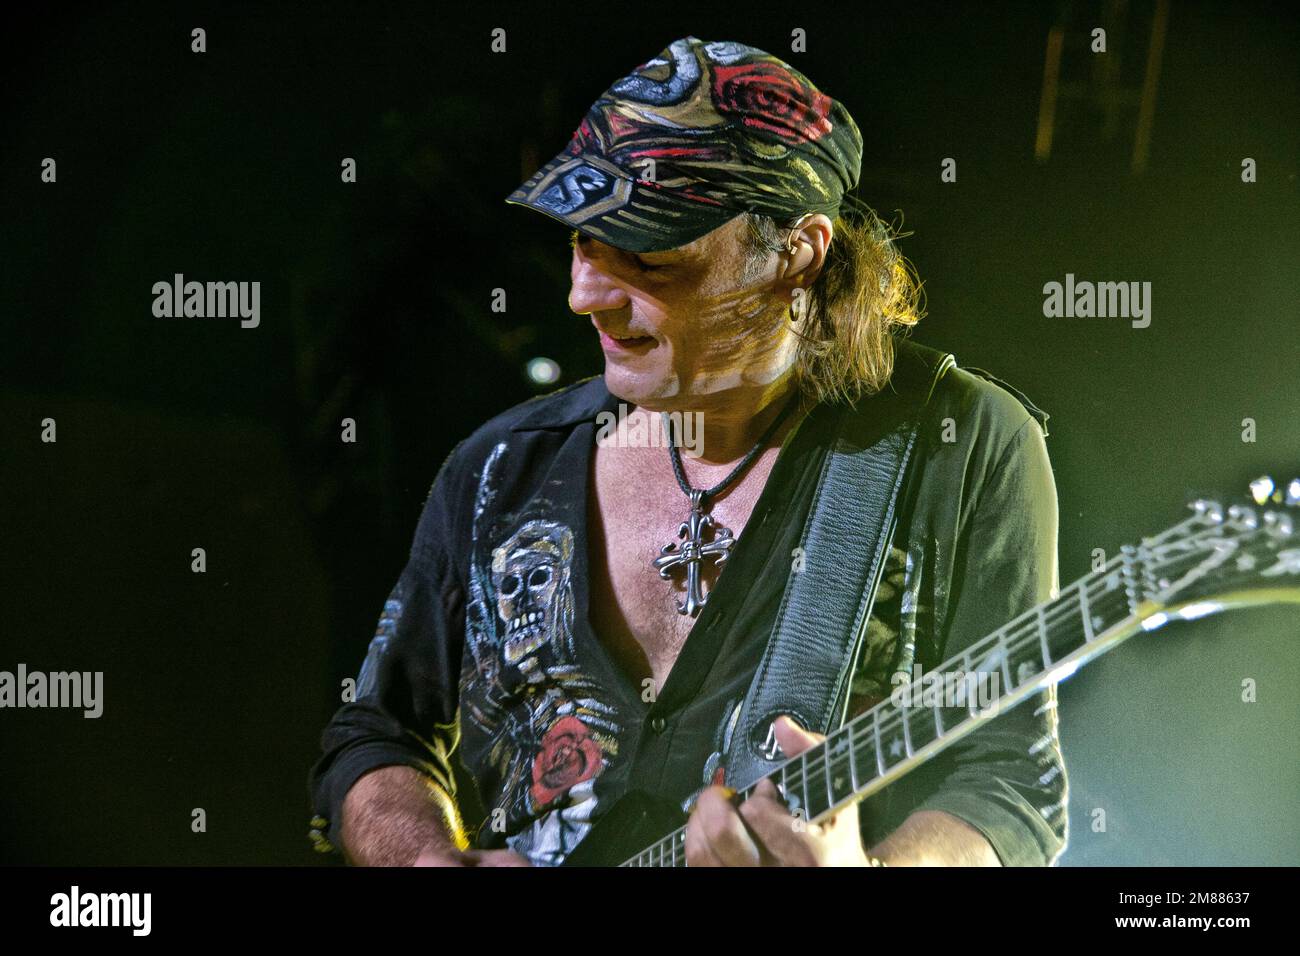 Matthias jabs, chitarrista della rock band tedesca Scorpions. Lisbona, 2011 Foto Stock